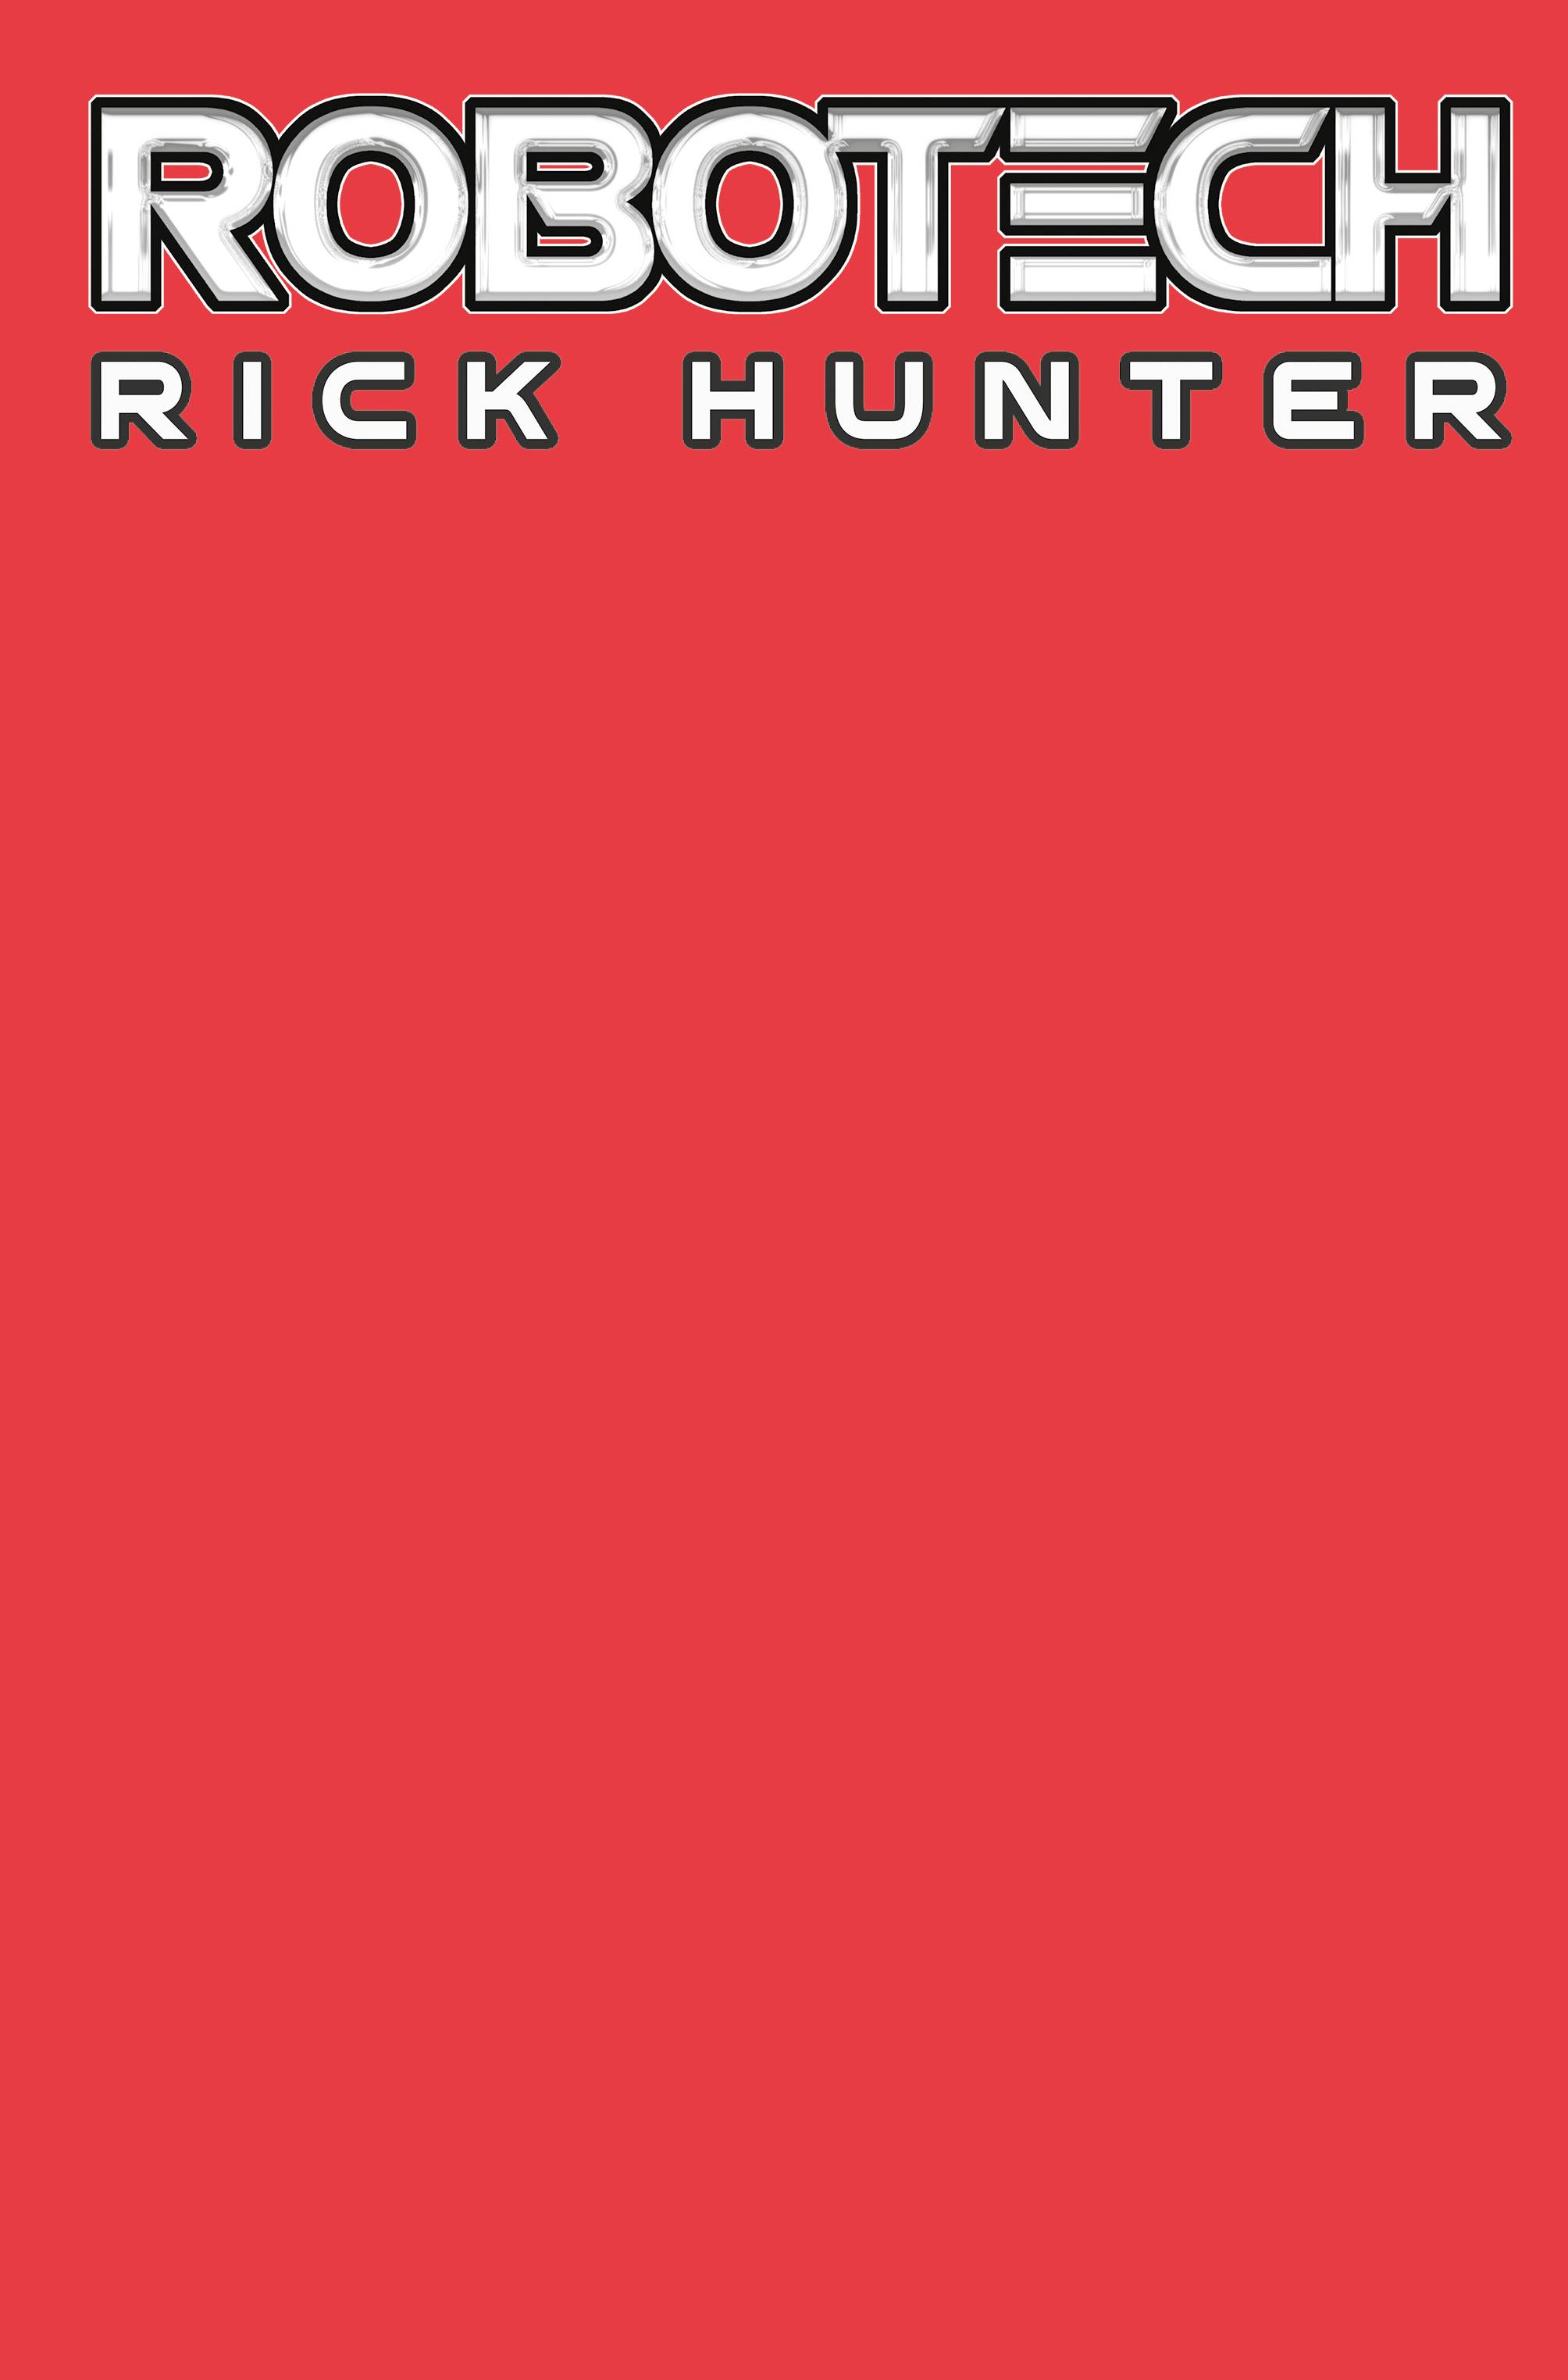 ROBOTECH RICK HUNTER #1 (OF 4) CVR F BLANK SKETCH